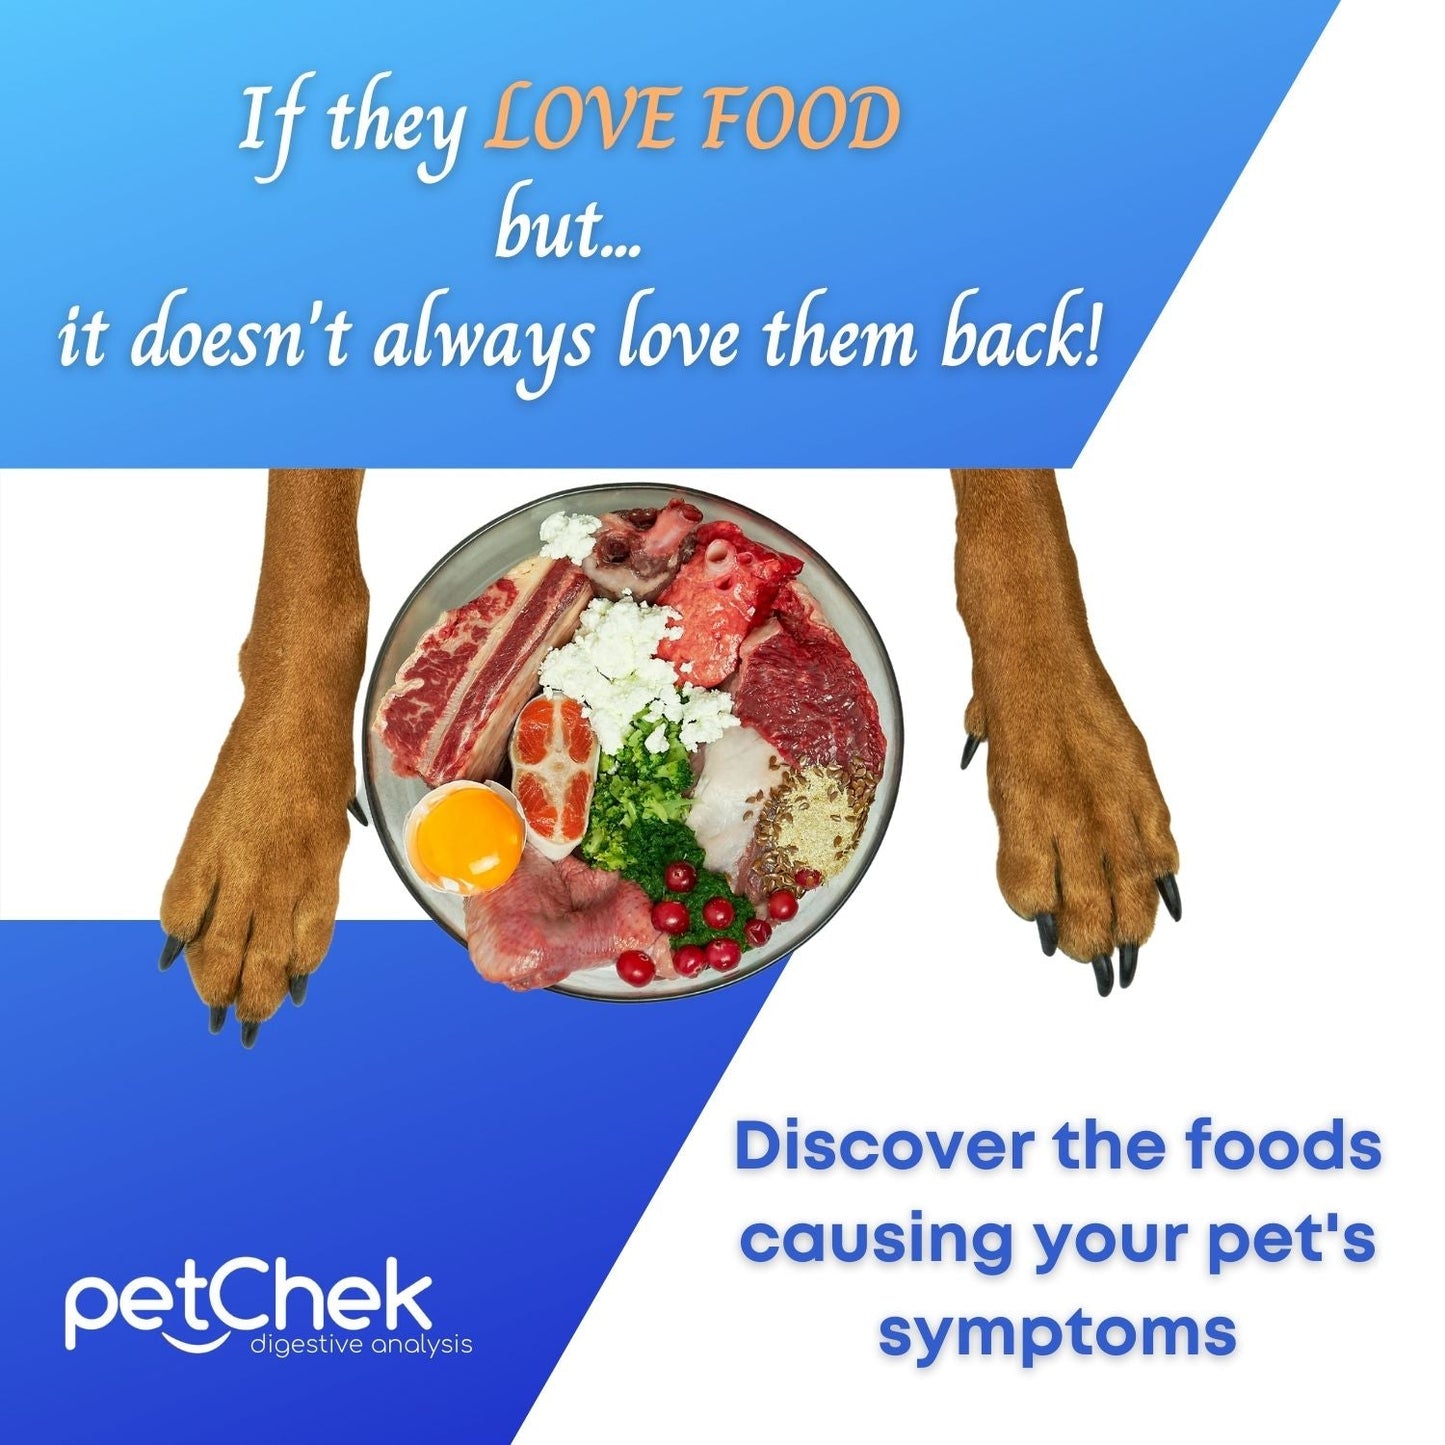 Food Intolerance - Pet - Premium Test - Next Gen. Pet